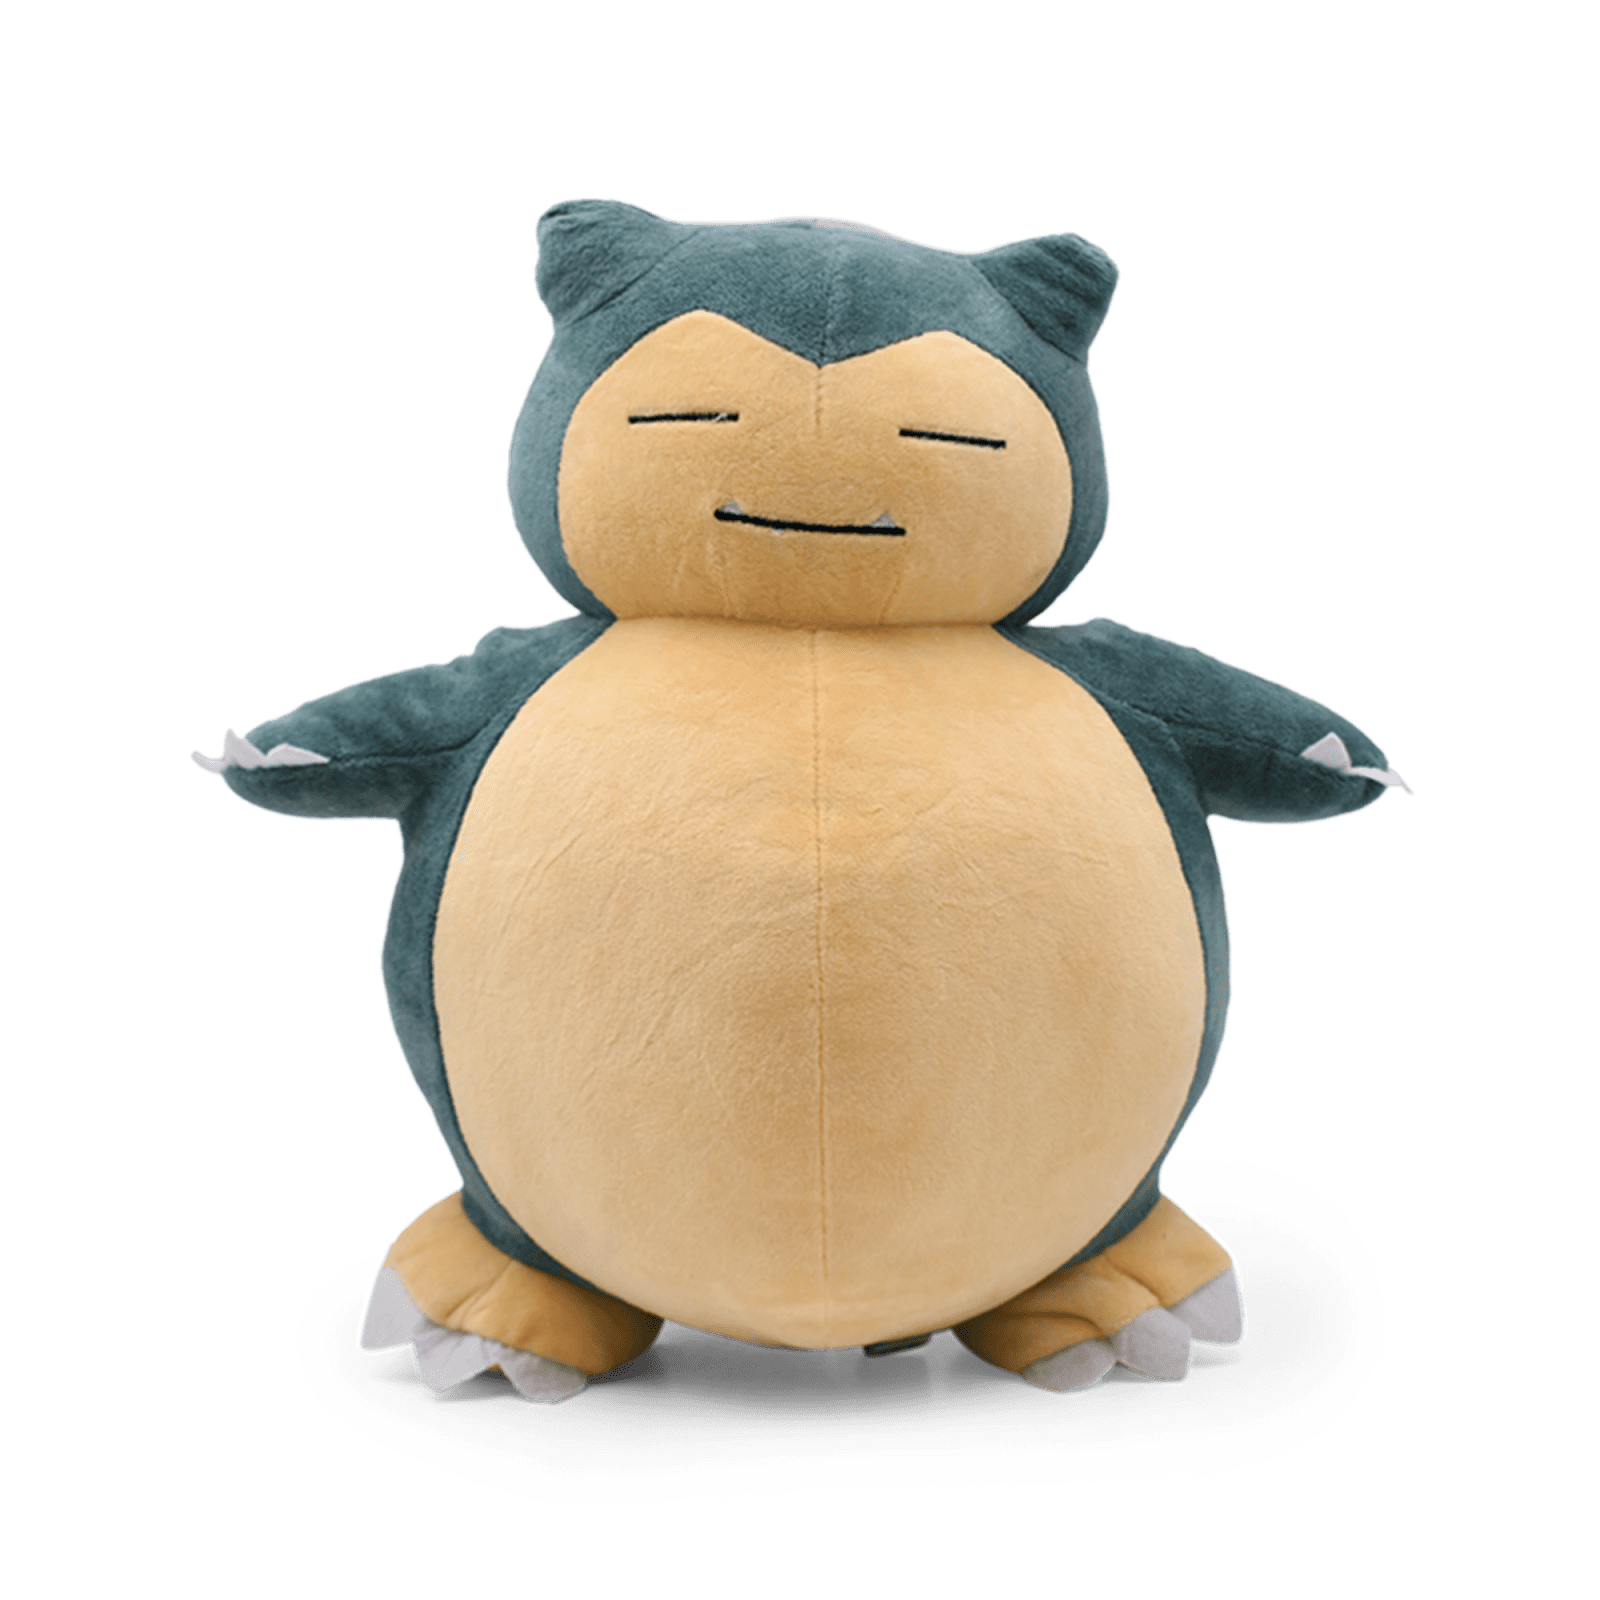 Details about  / Official Pokemon Pikachu /& Jigglypuff Plush Stuffed Figure Doll Toy Gift Kids